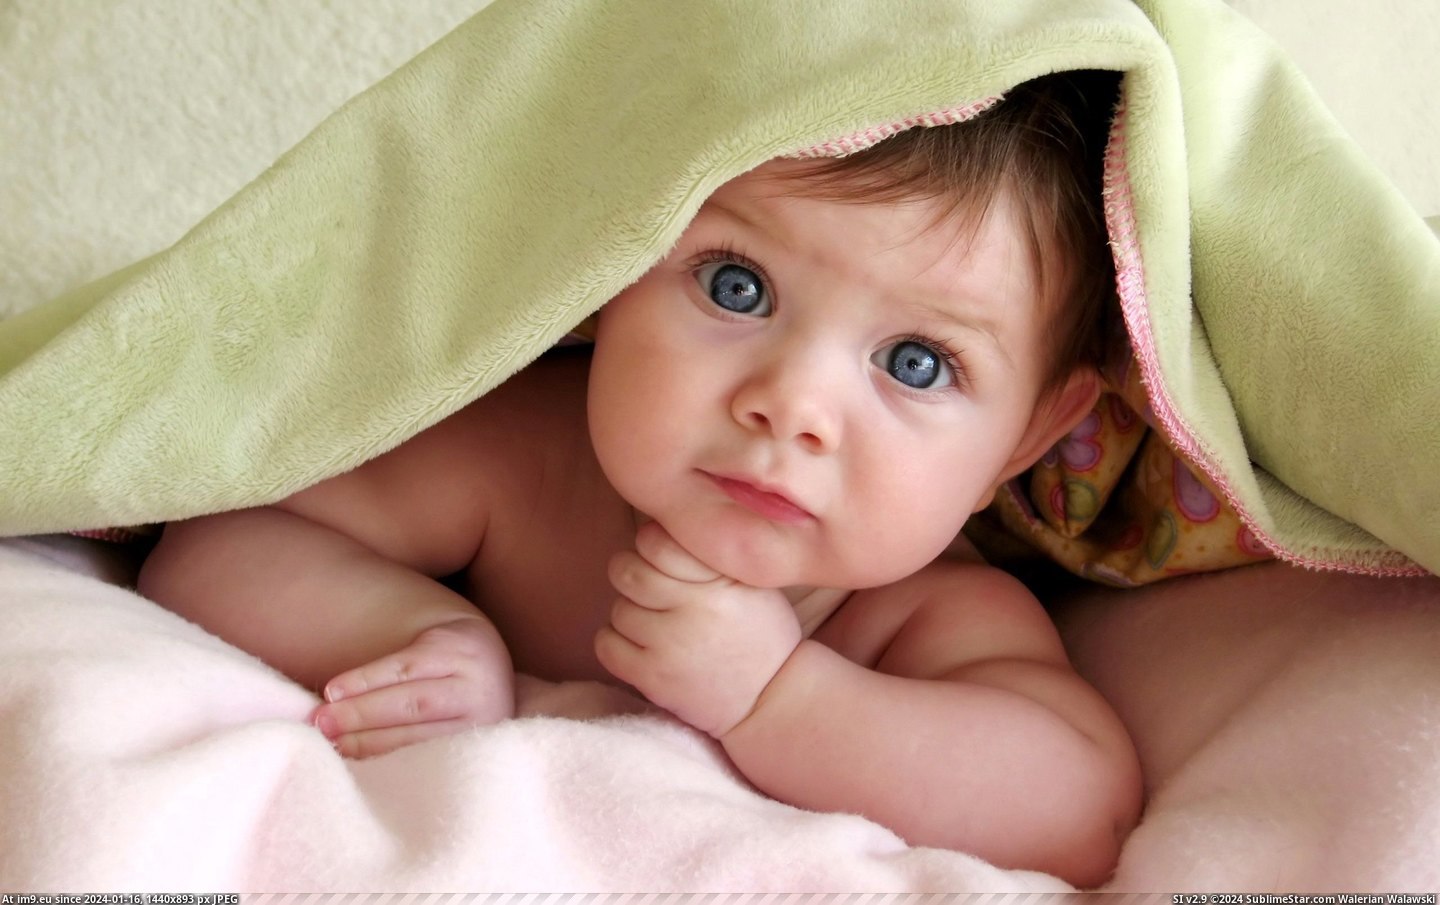 #Cute #Wallpaper #Starring #Wide #Baby Cute Baby Starring Wide HD Wallpaper Pic. (Image of album Unique HD Wallpapers))